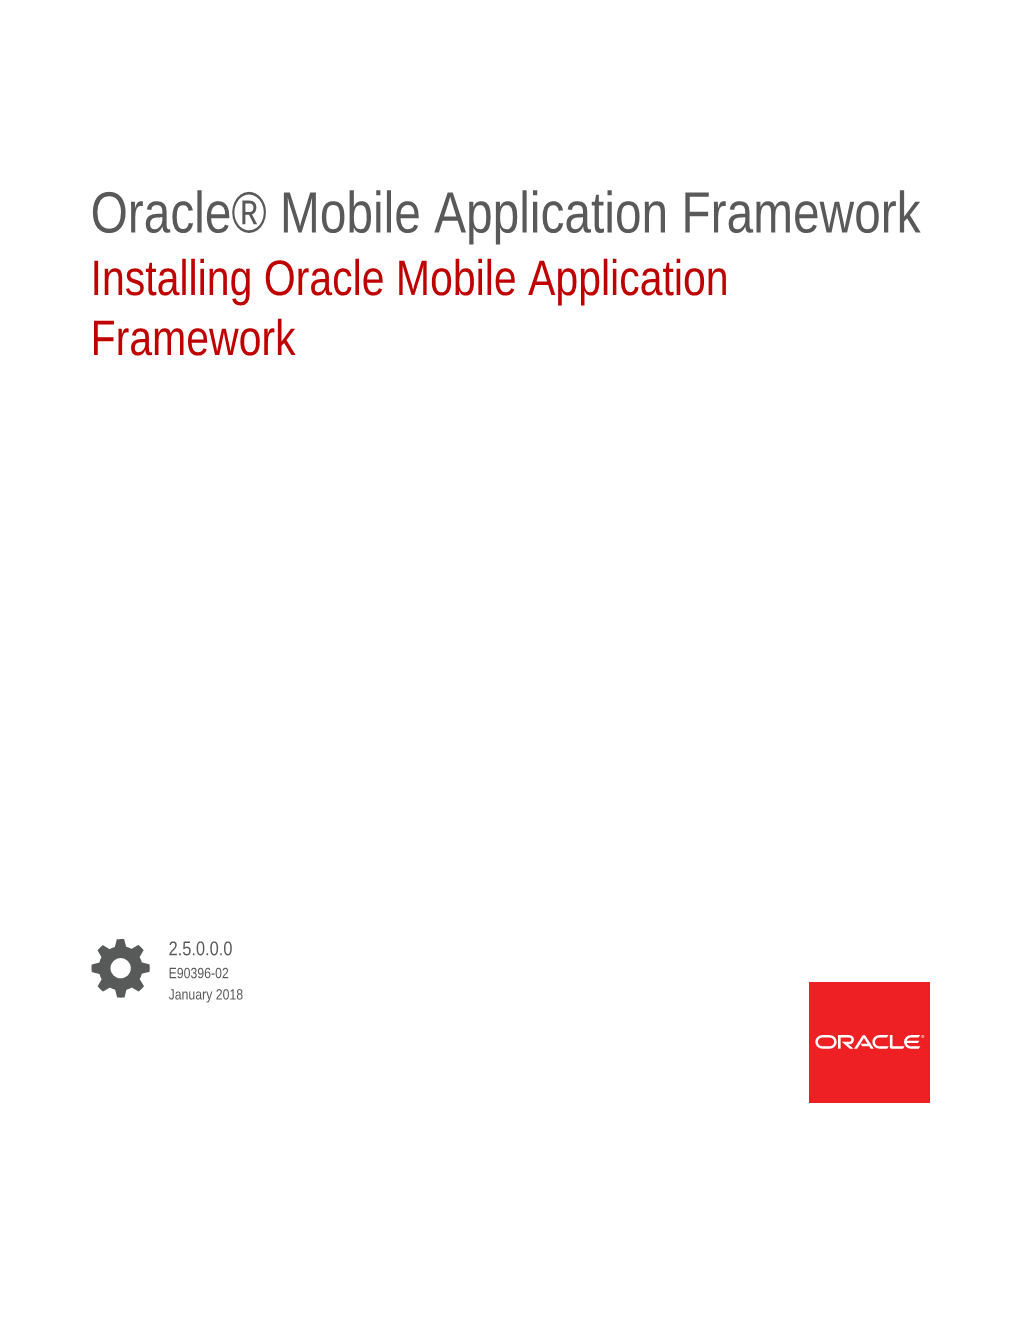 Installing Oracle Mobile Application Framework